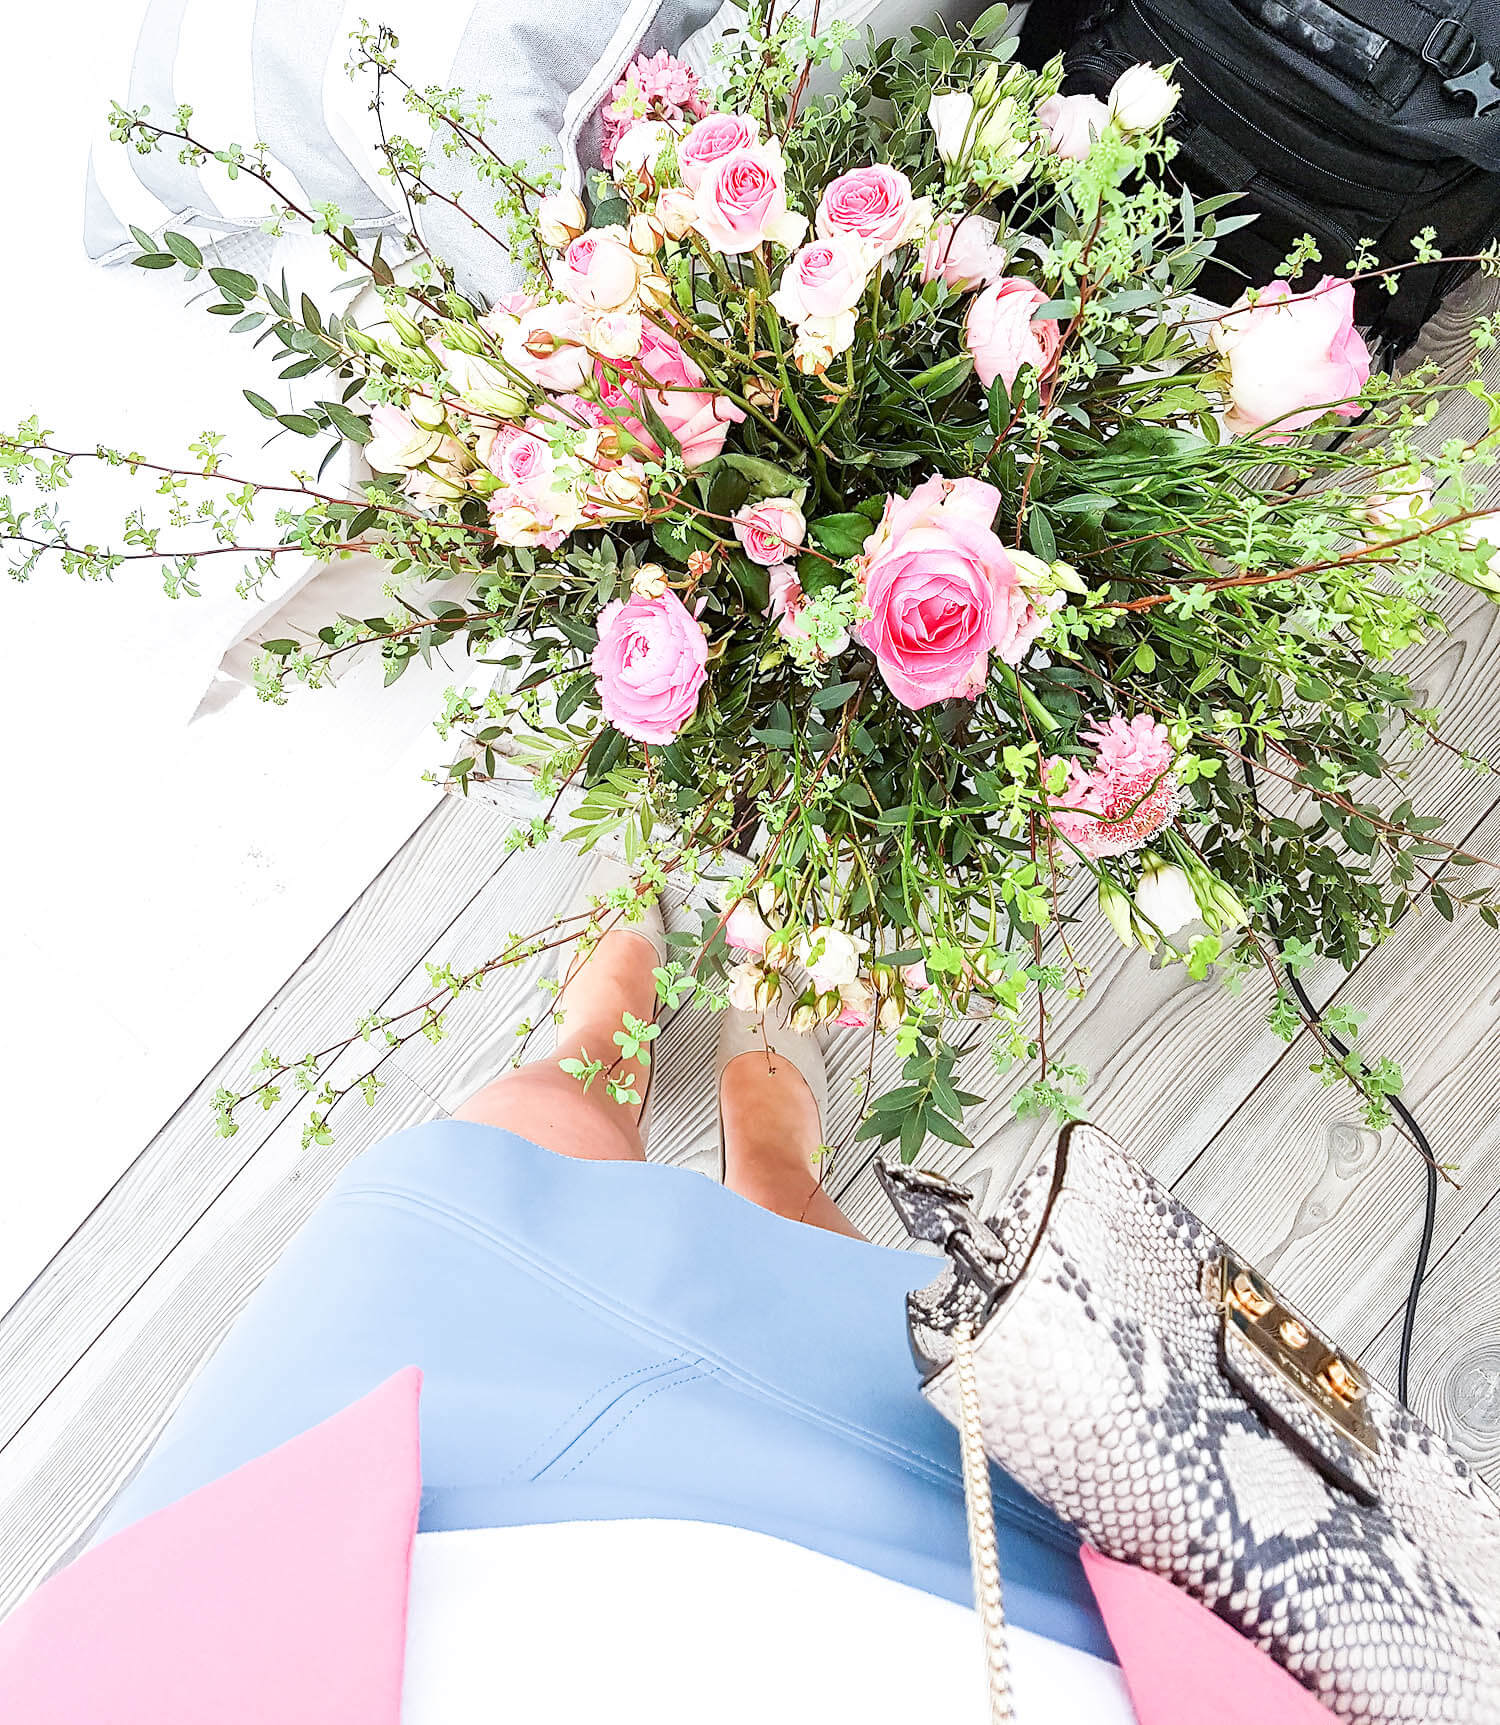 Kationette-lifestyleblog-Lifestyle-Launch-blogger-Event-Box-Stories-gofeminin-flowercrown-whiteloft-duesseldorf